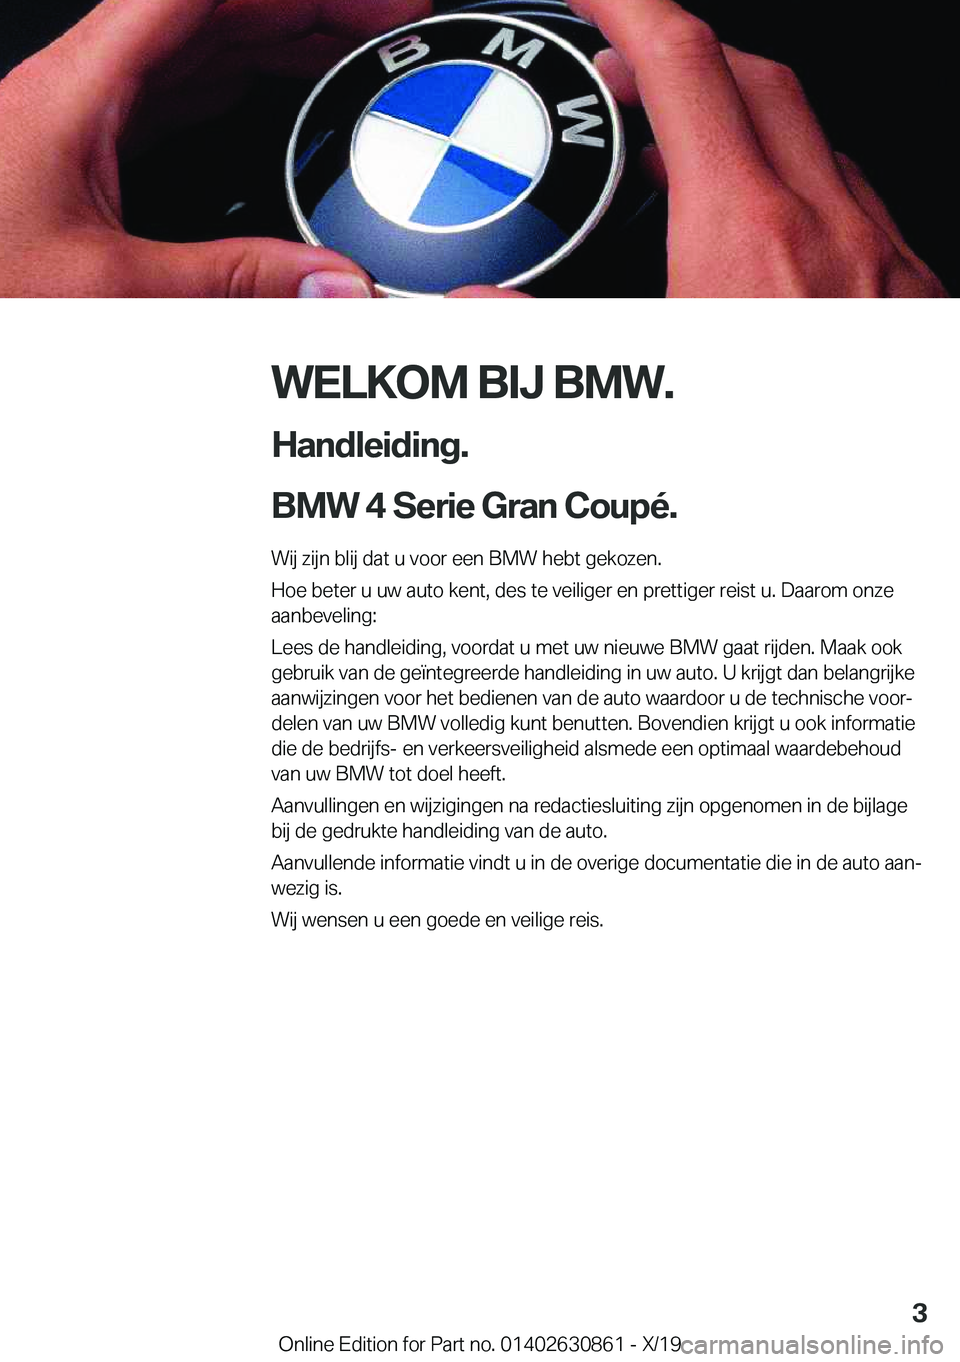 BMW 4 SERIES GRAN COUPE 2020  Instructieboekjes (in Dutch) �W�E�L�K�O�M��B�I�J��B�M�W�.
�H�a�n�d�l�e�i�d�i�n�g�.
�B�M�W��4��S�e�r�i�e��G�r�a�n��C�o�u�p�